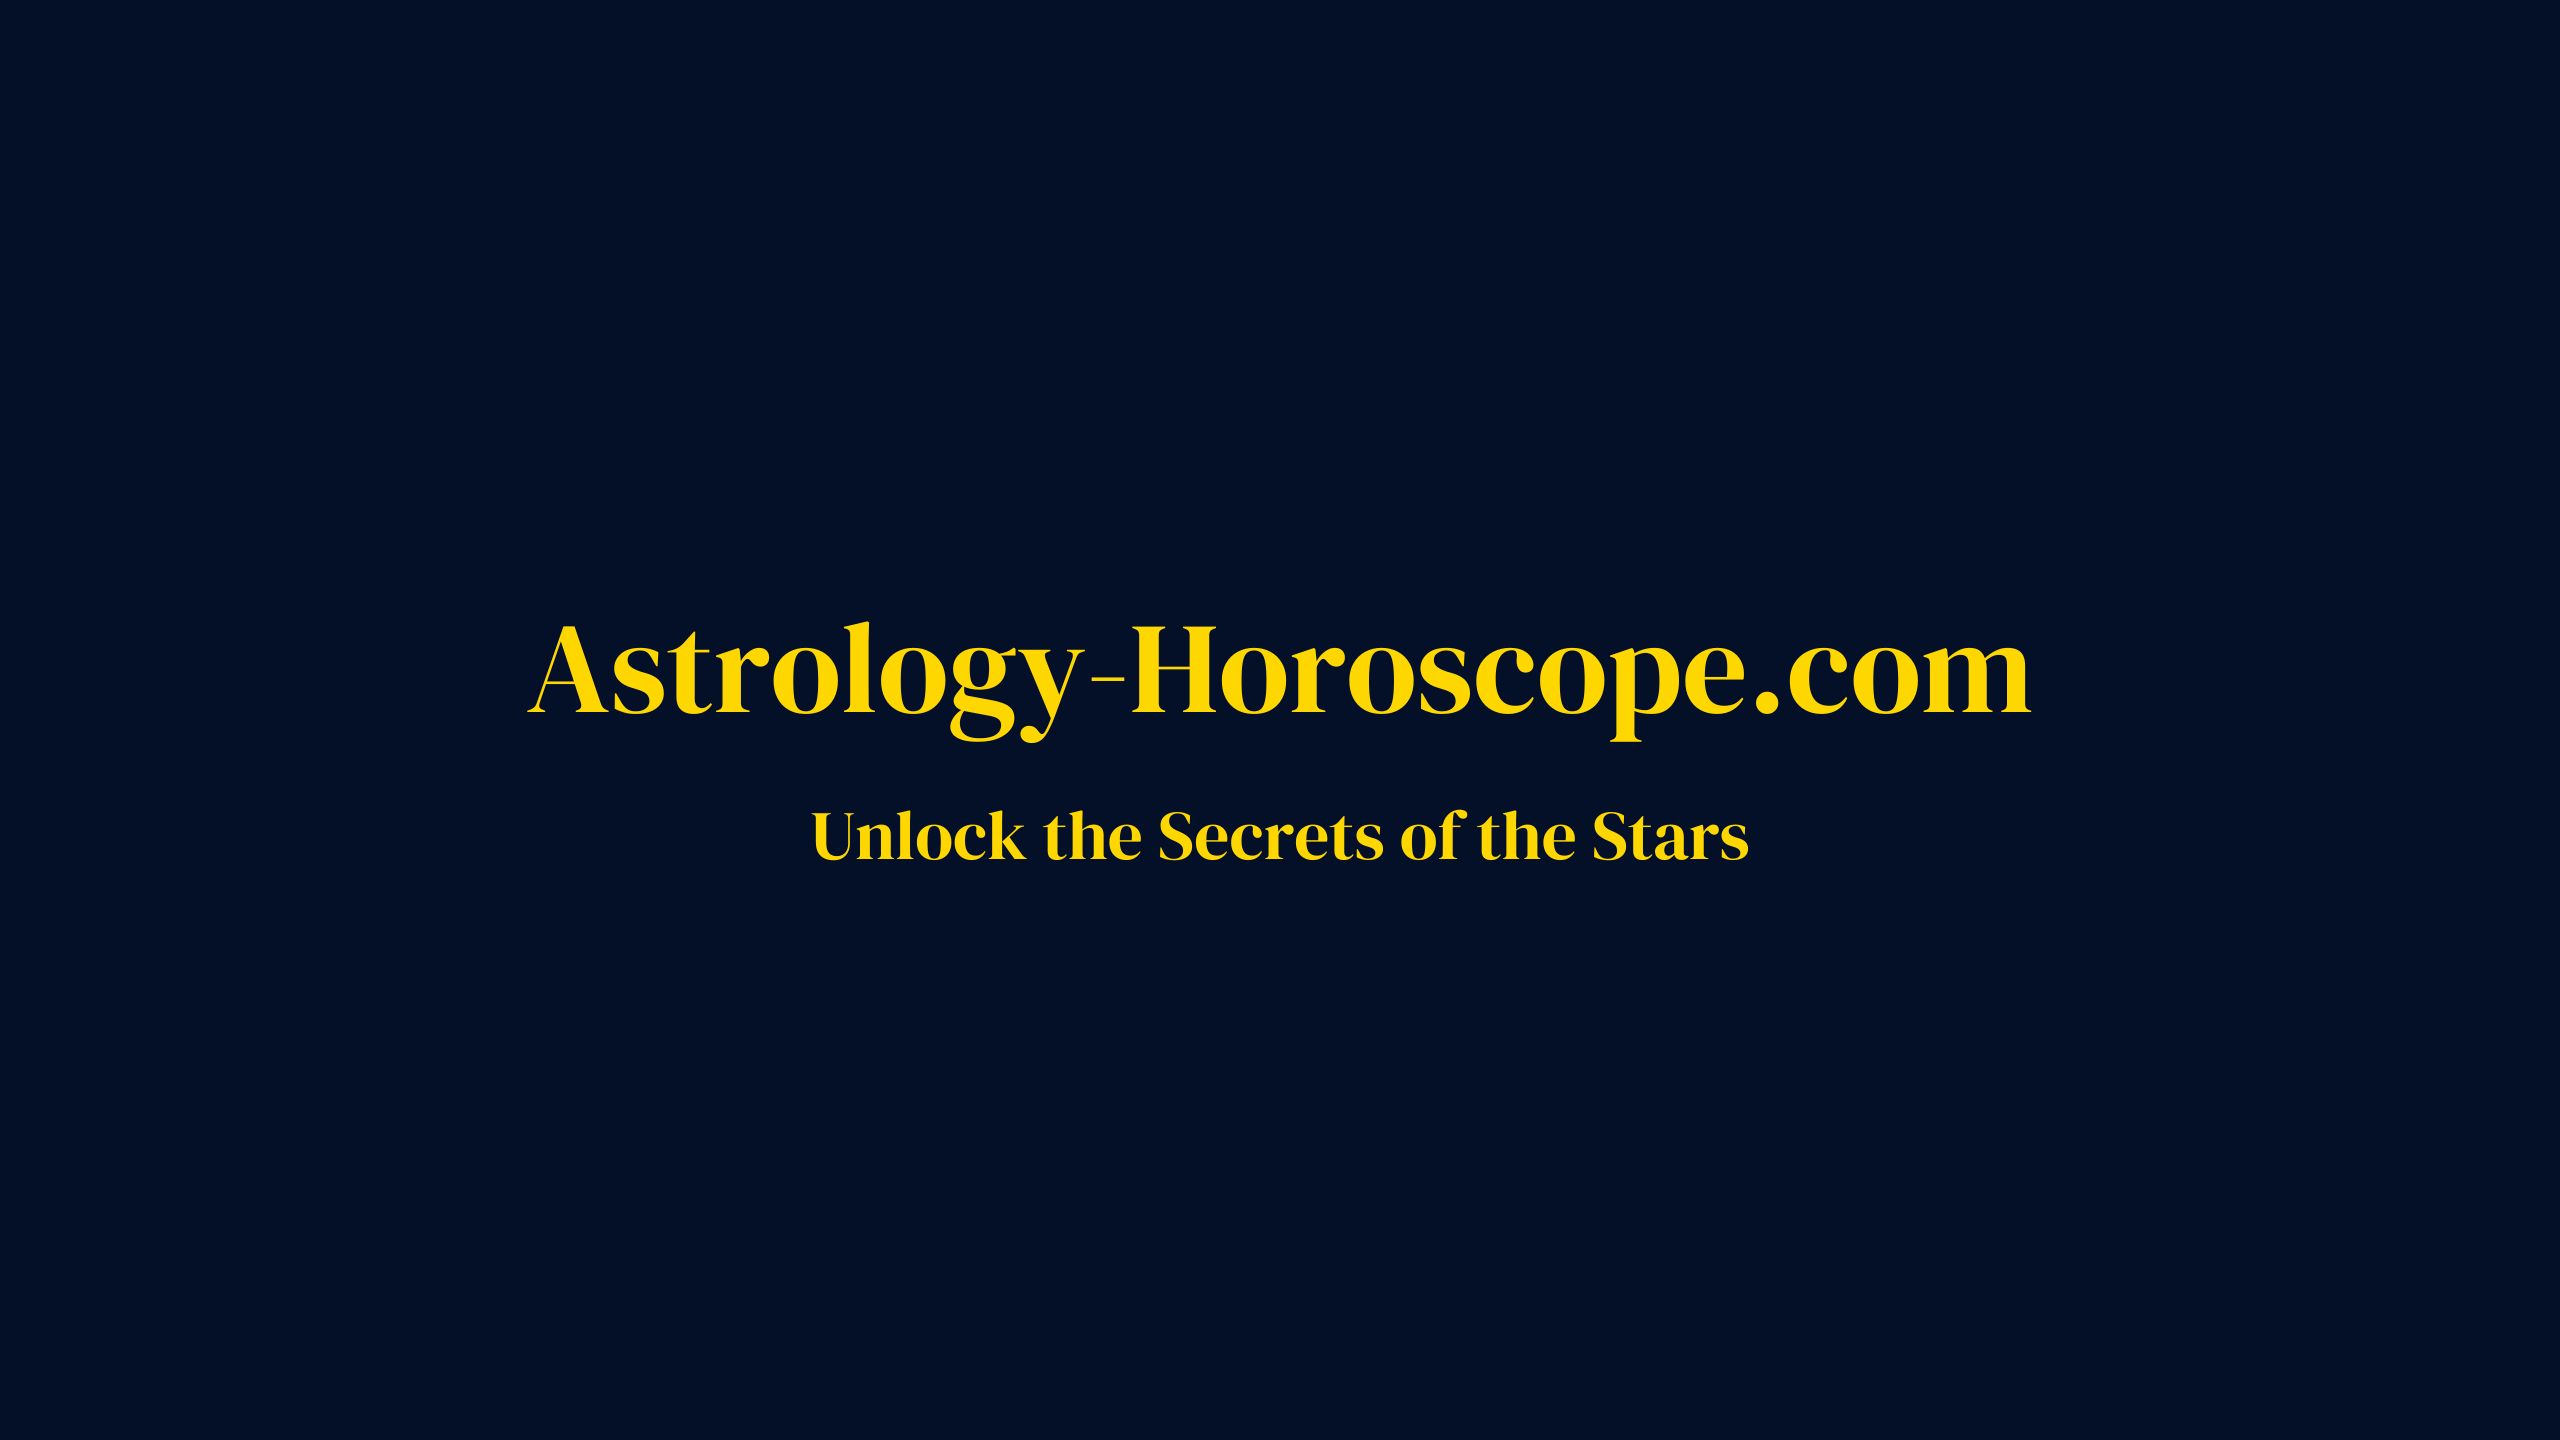 (c) Astrology-horoscope.com